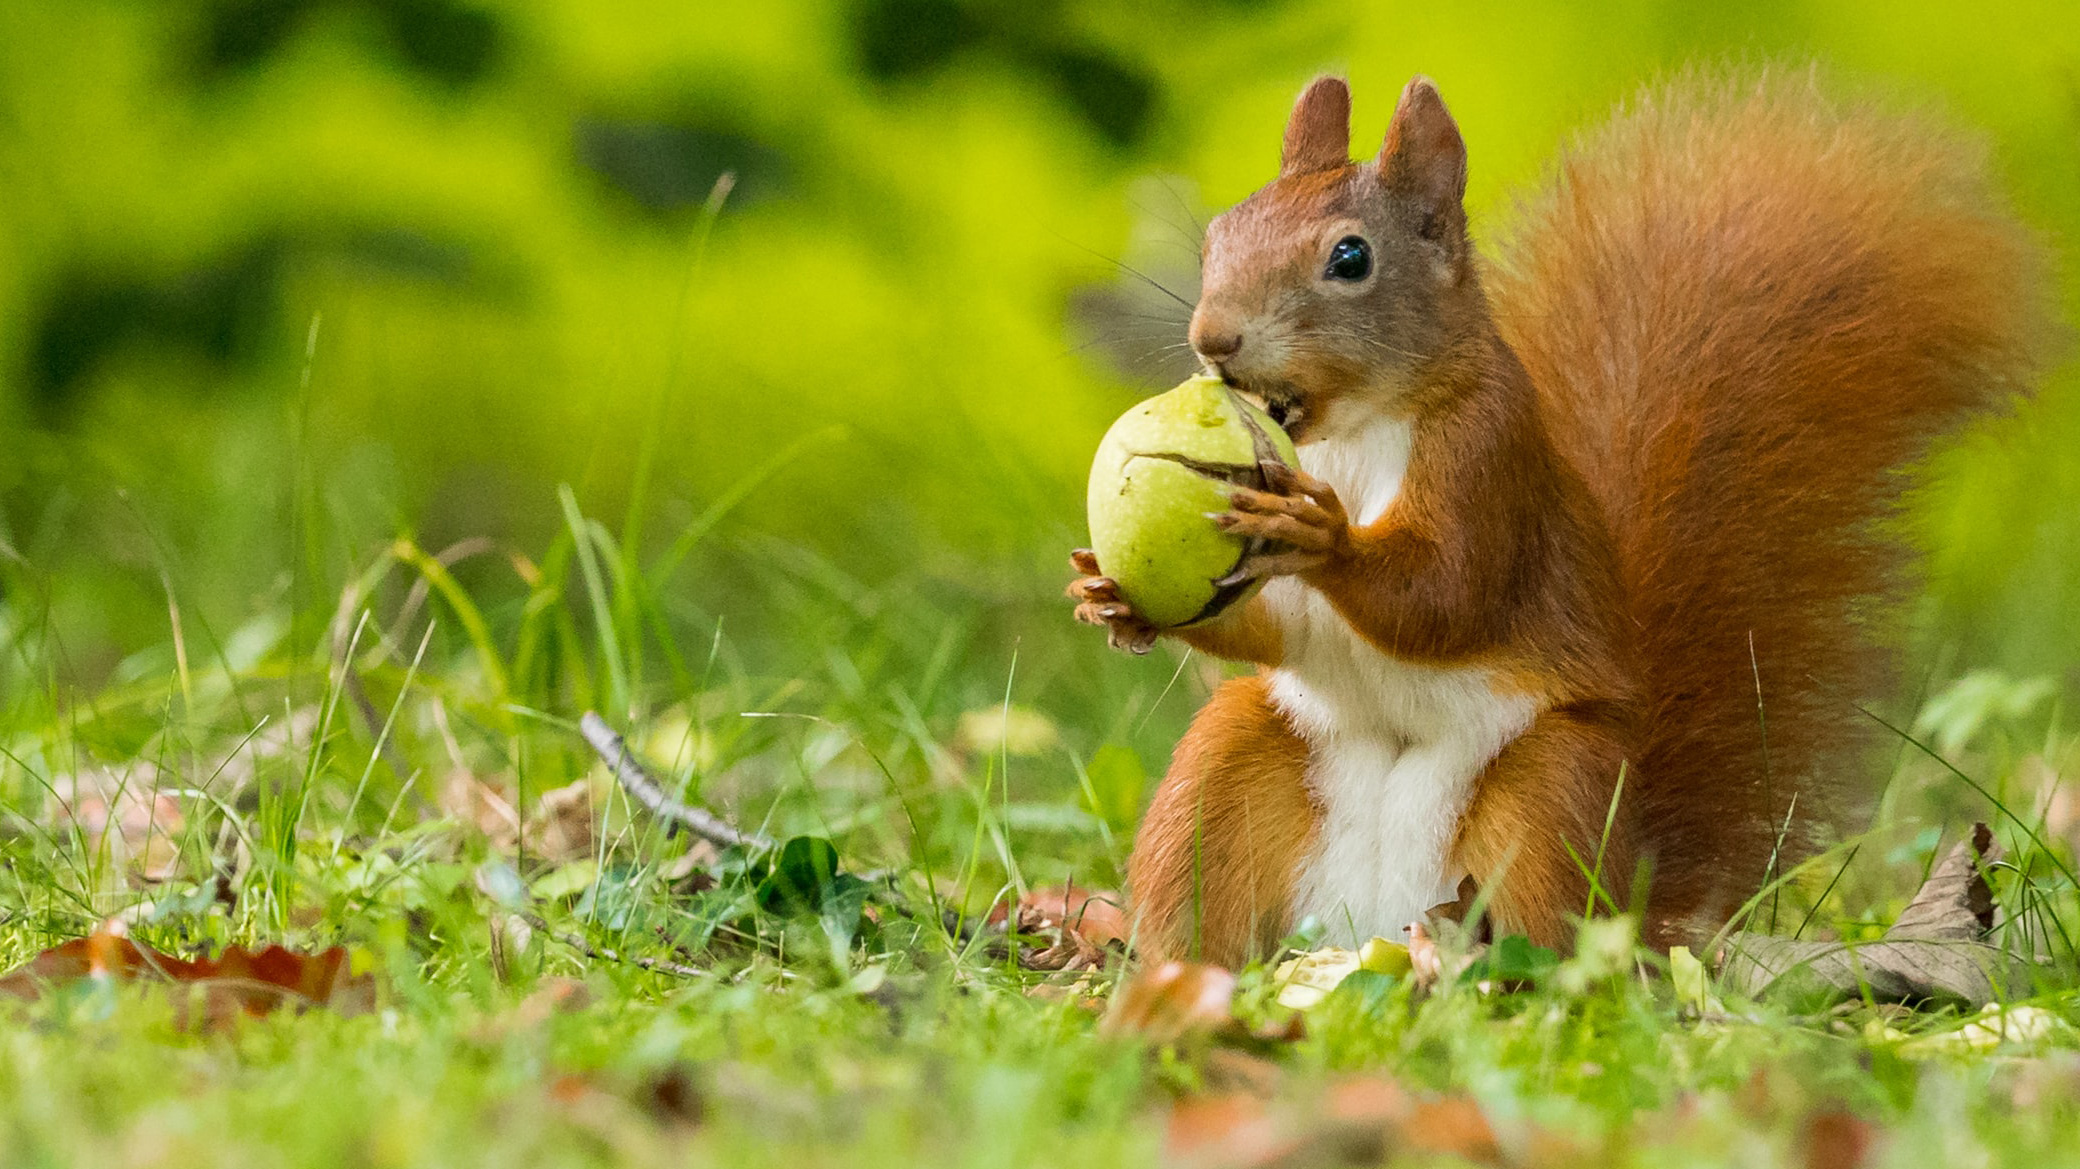 A squirrel holding a nut in the Czech Republic